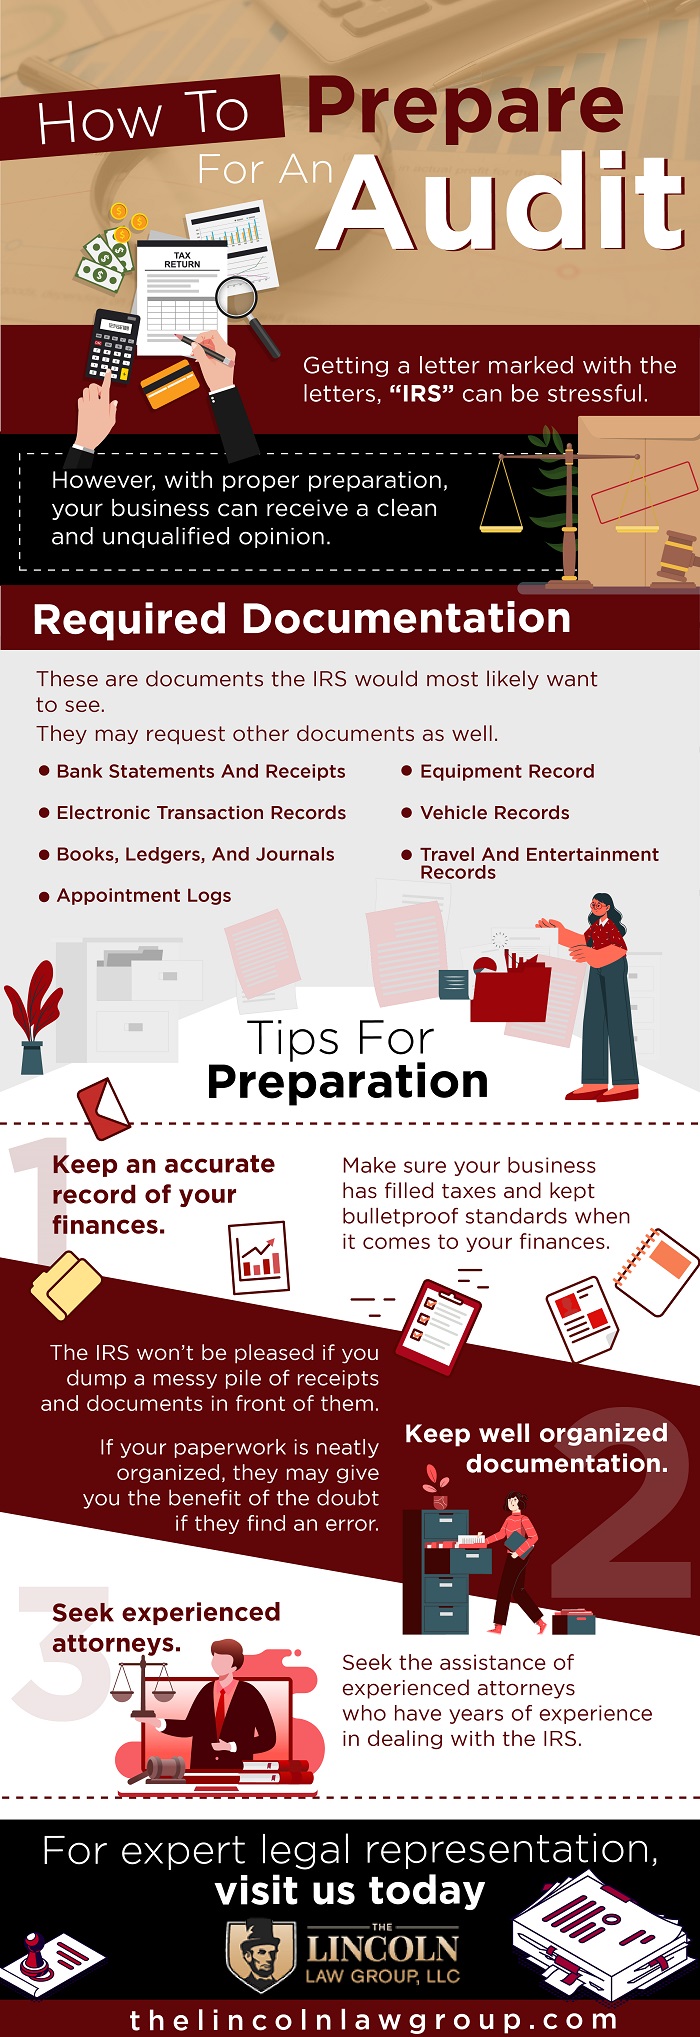 Tips on preparing for an audit